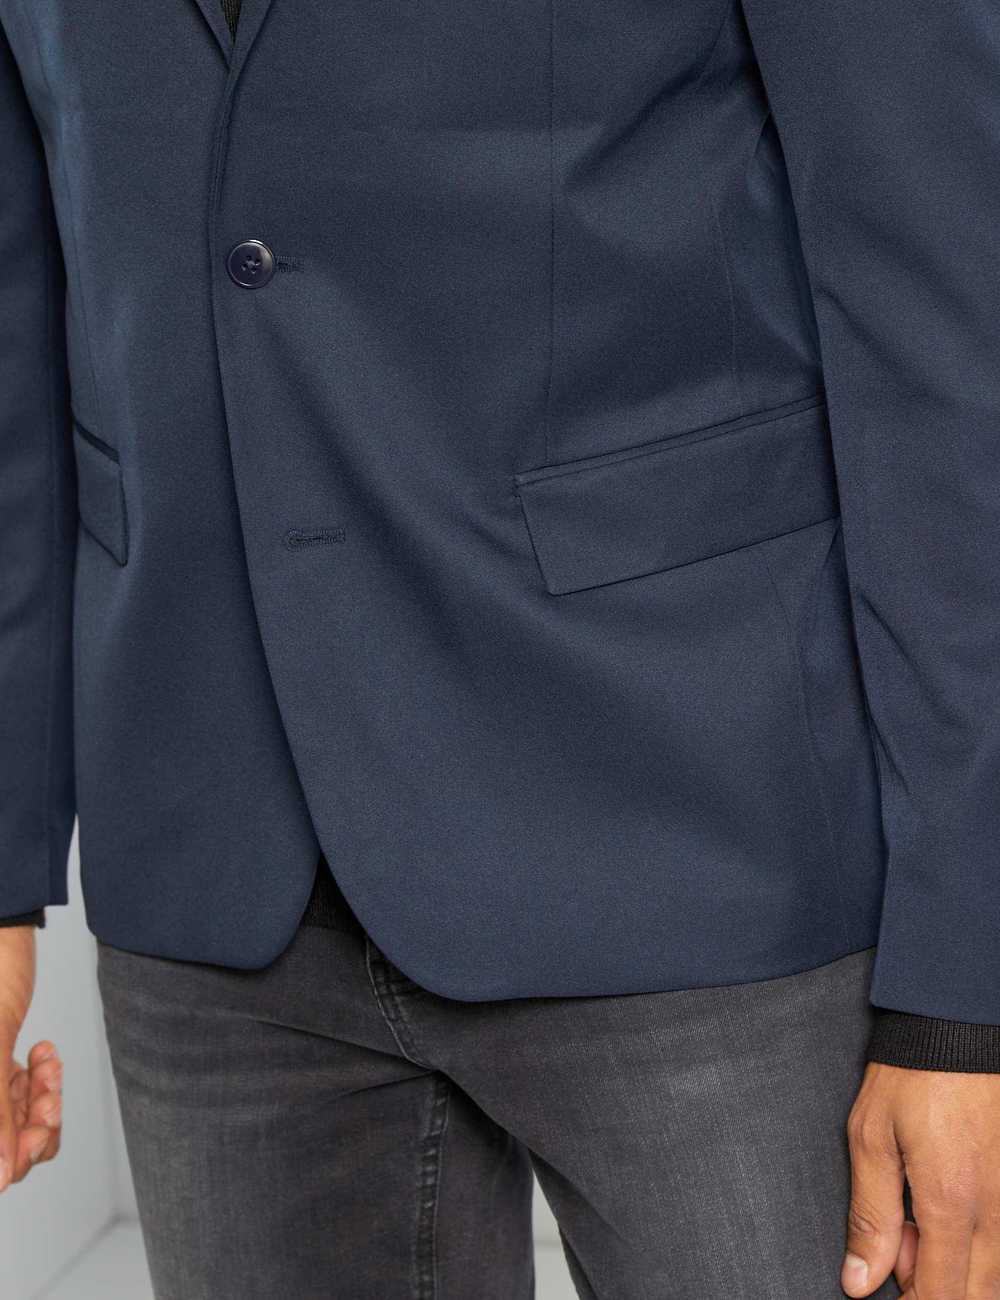 Buy Tailored suit jacket Online in Dubai & the UAE|Kiabi